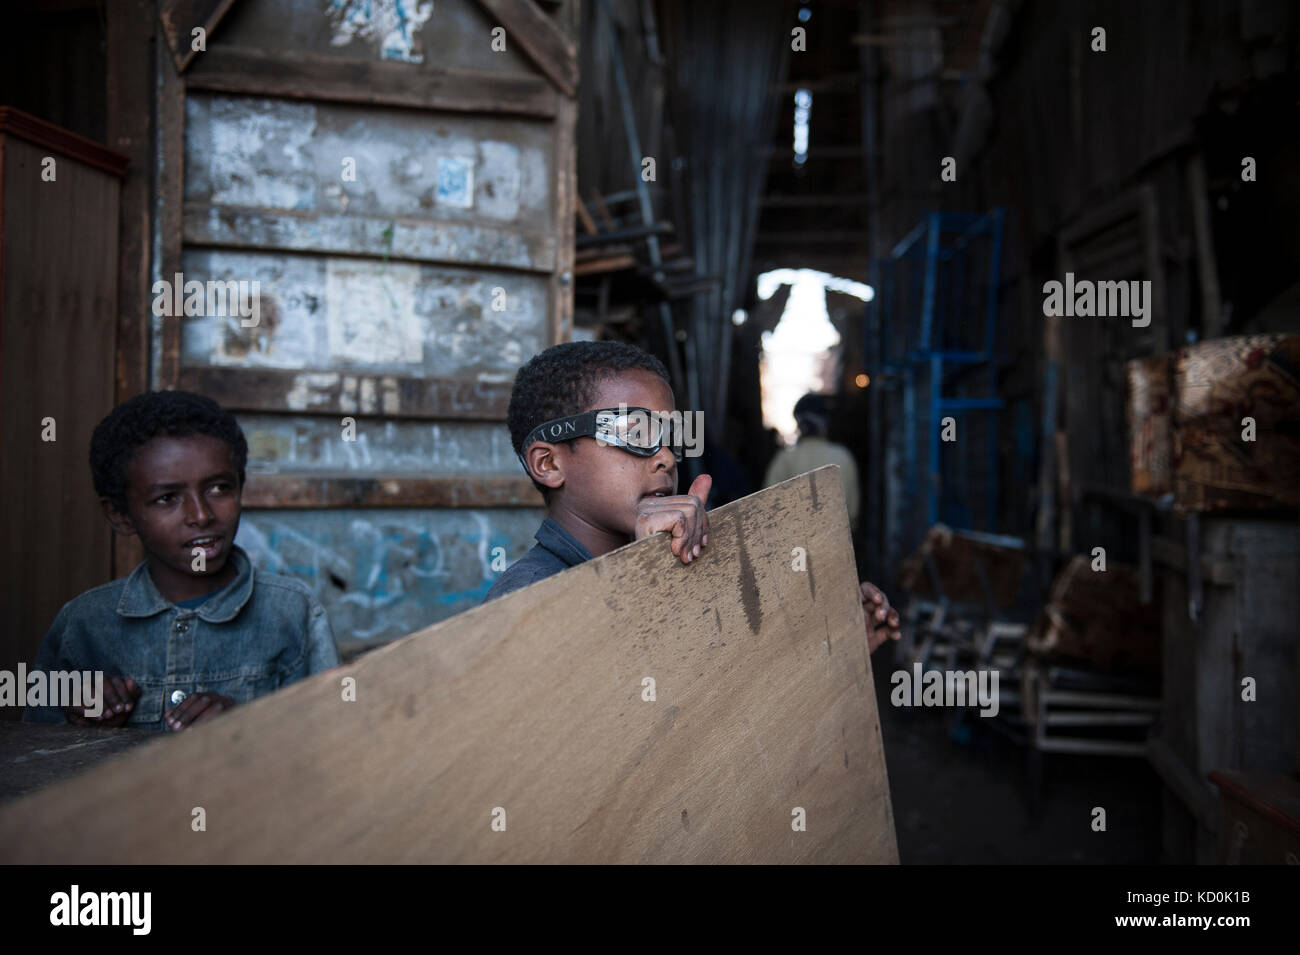 Un mineur au travail au marché des métaux d'Asmara, mars 2013. A young boy working at the metal market in Asmara, march 2013. Stock Photo